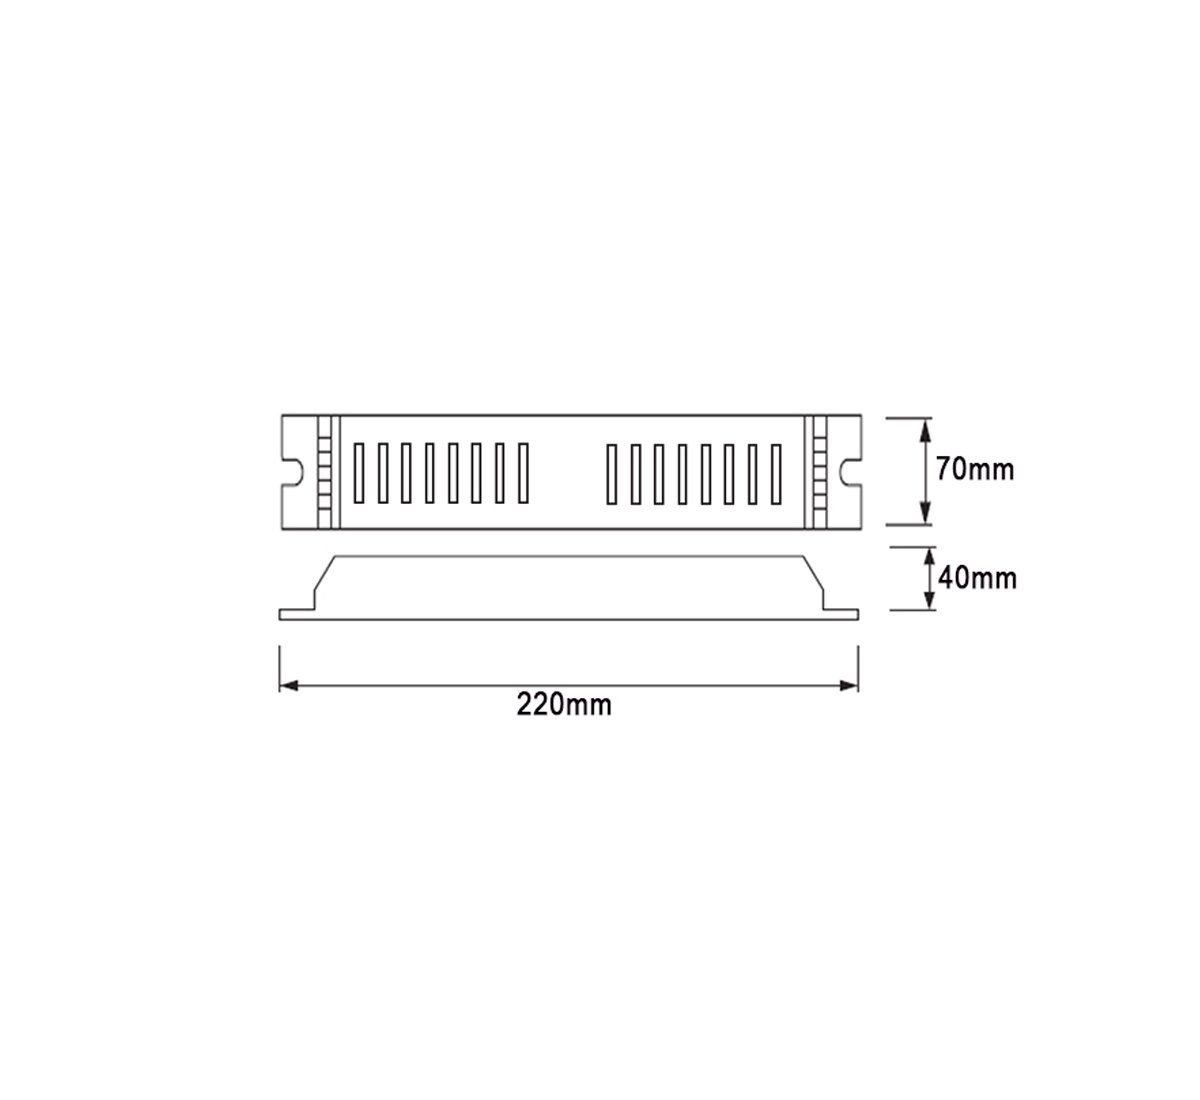 LED für Strip) 20A 12V LED 250W Produkte Braytron Treiber LED AC Adapter Trafo Netzteil AC LED - (Transformator Trafo Trafo - Adapter und